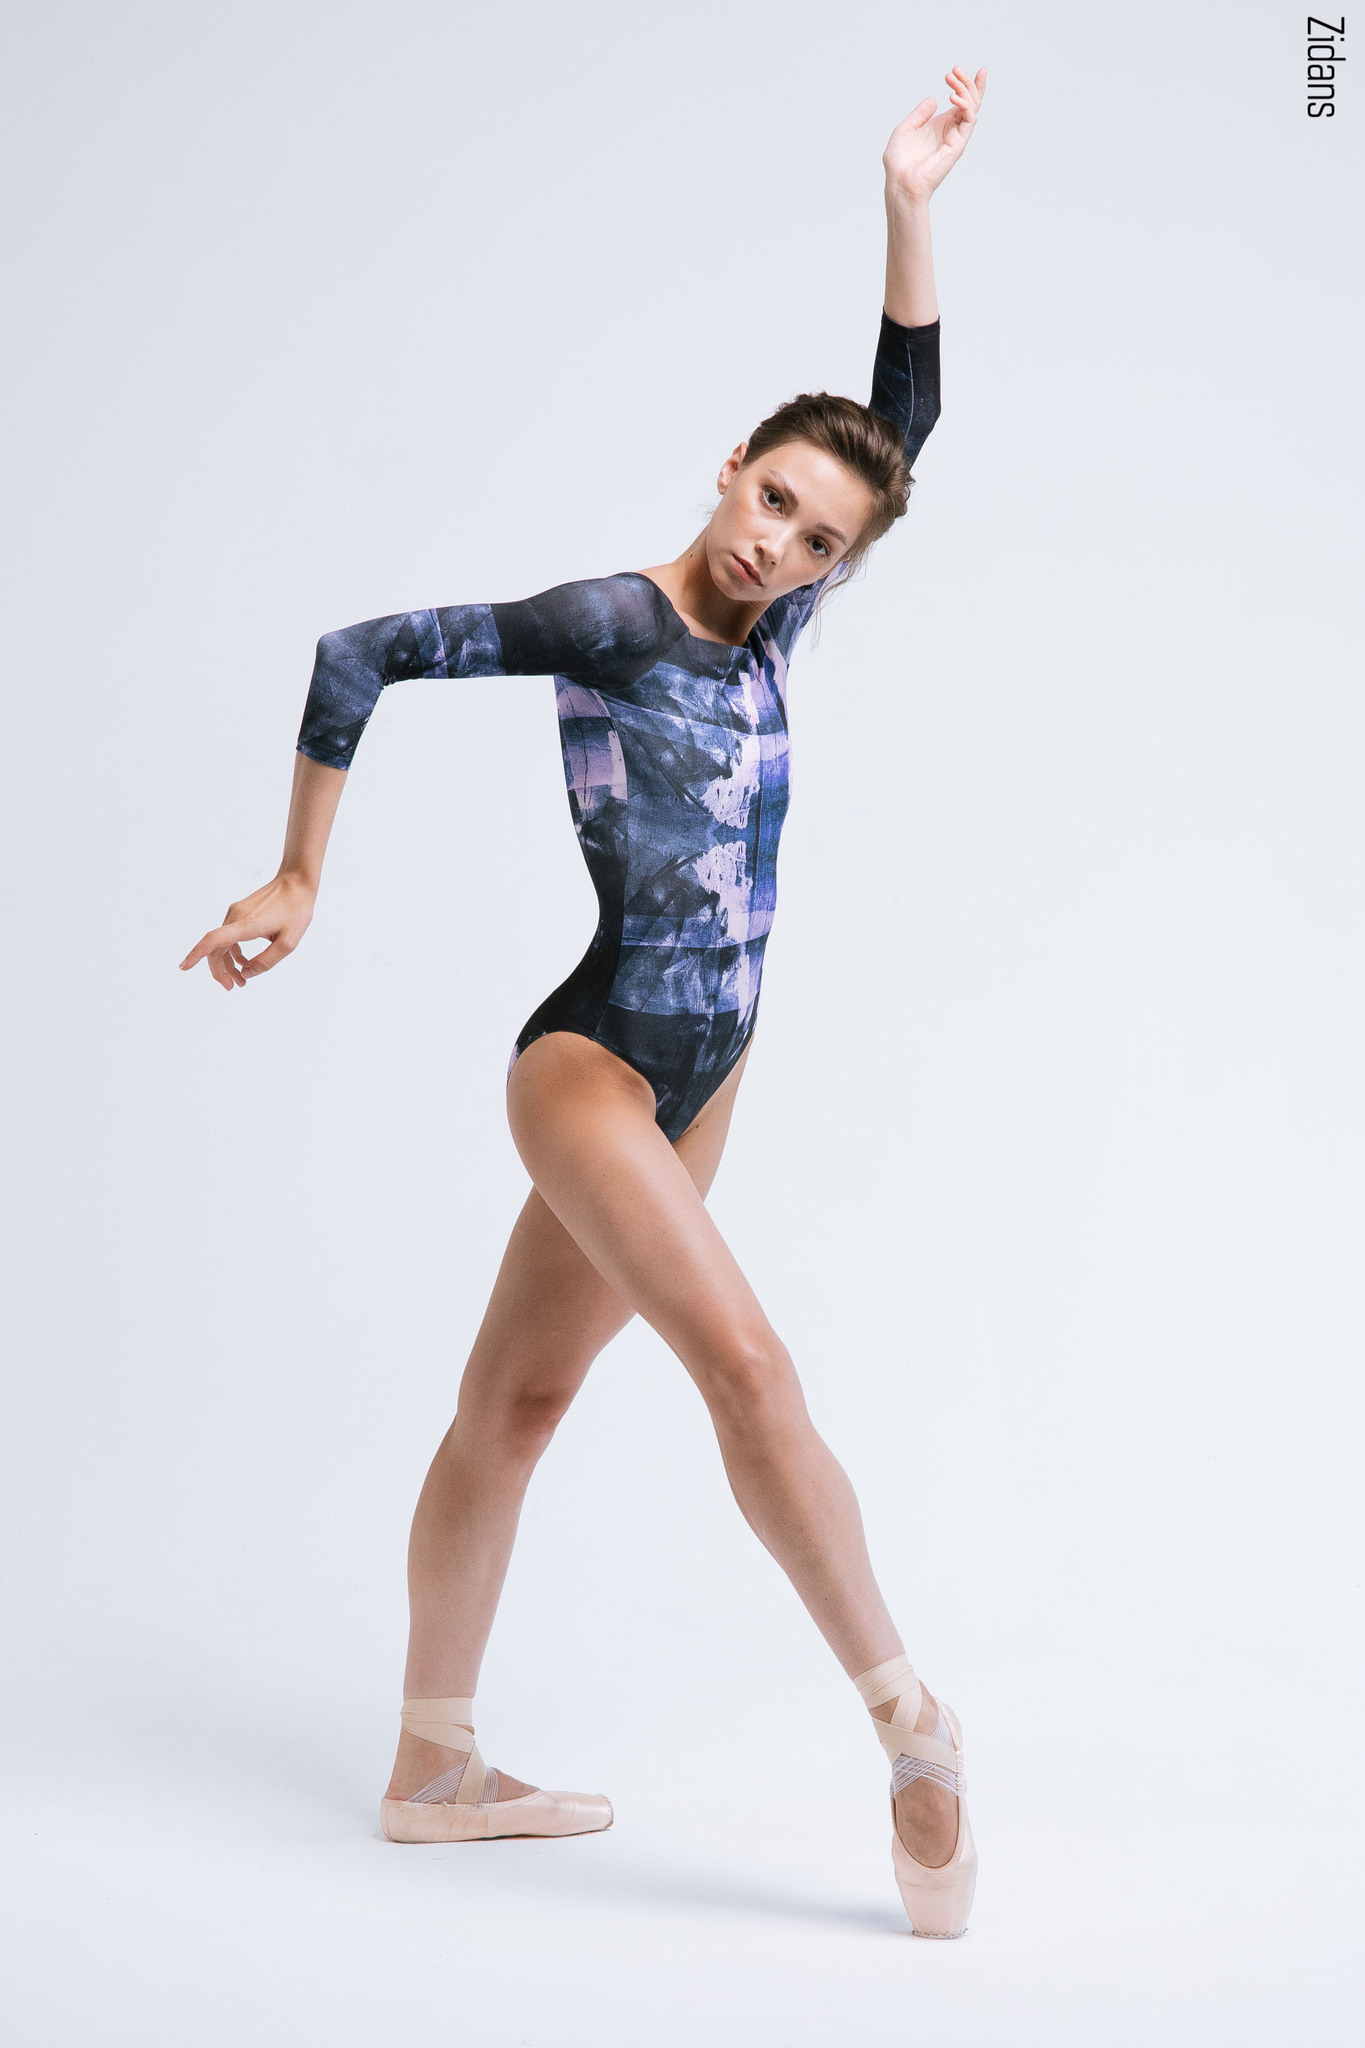 Girls Gymnastic Dance Leotard with Leggings Set Ballet Skating Active  Outfits